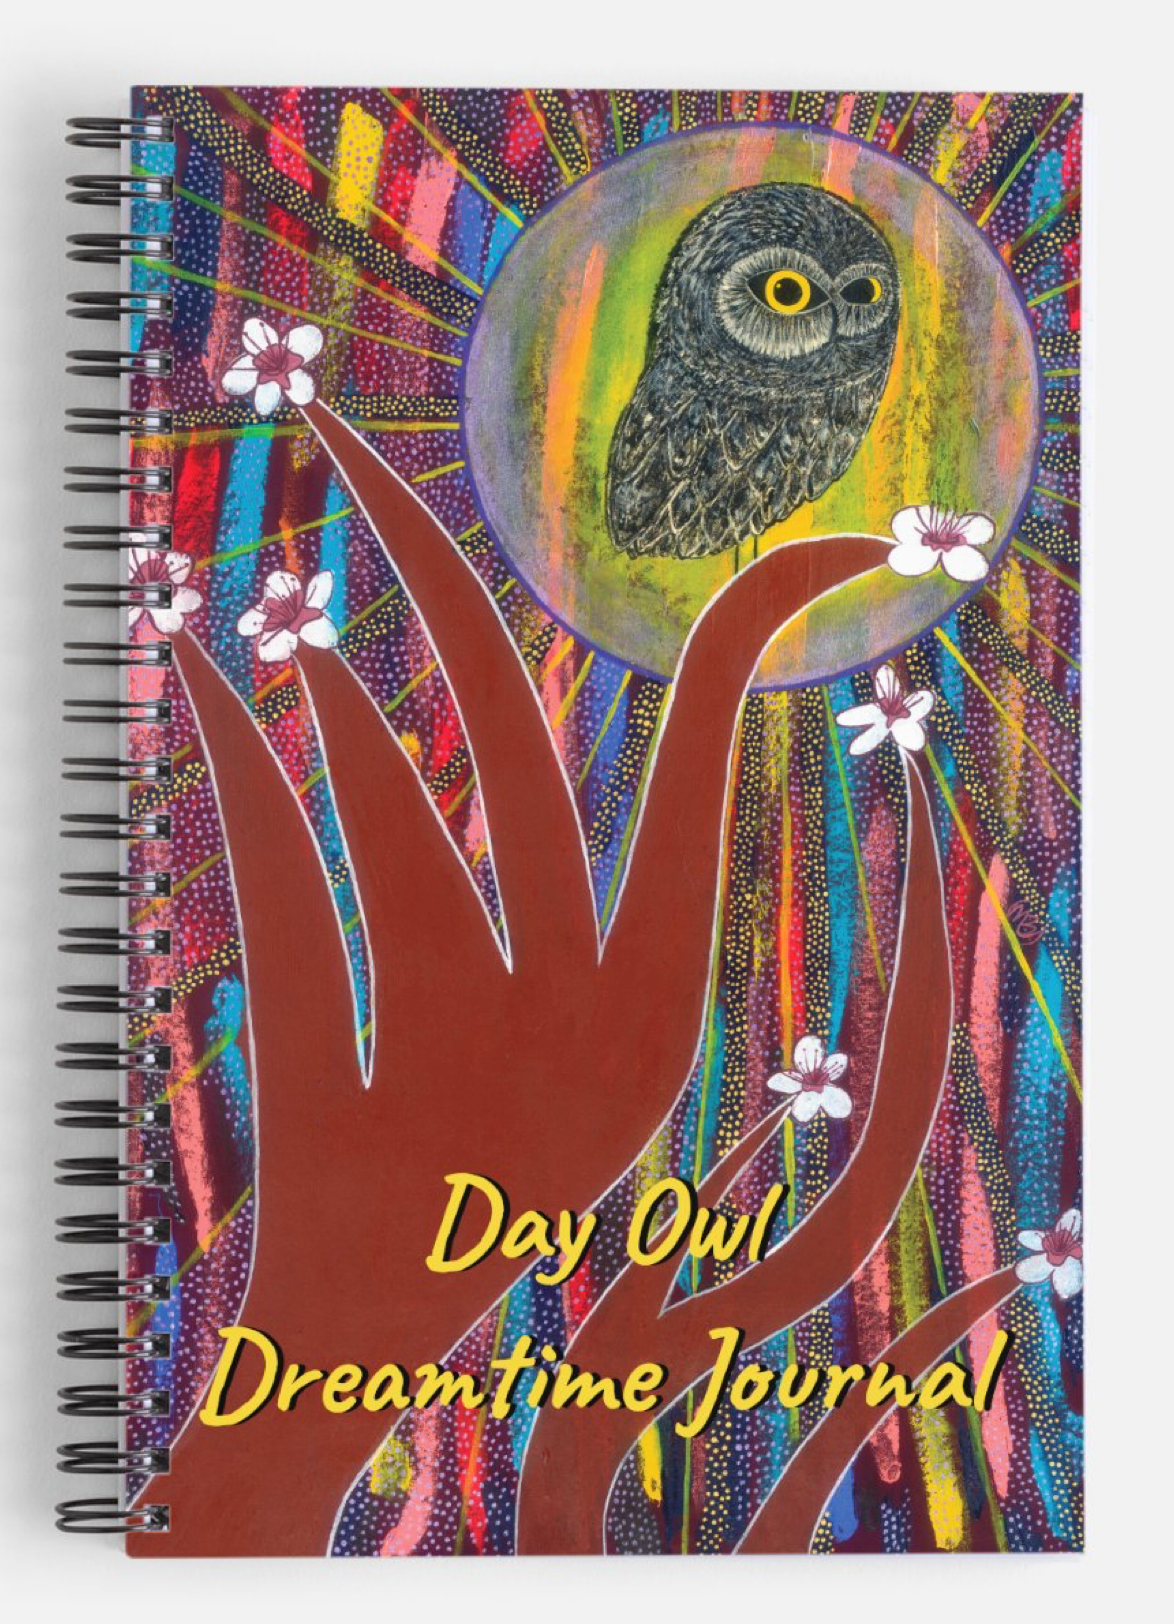 Dreamtime Day Owl JOURNAL